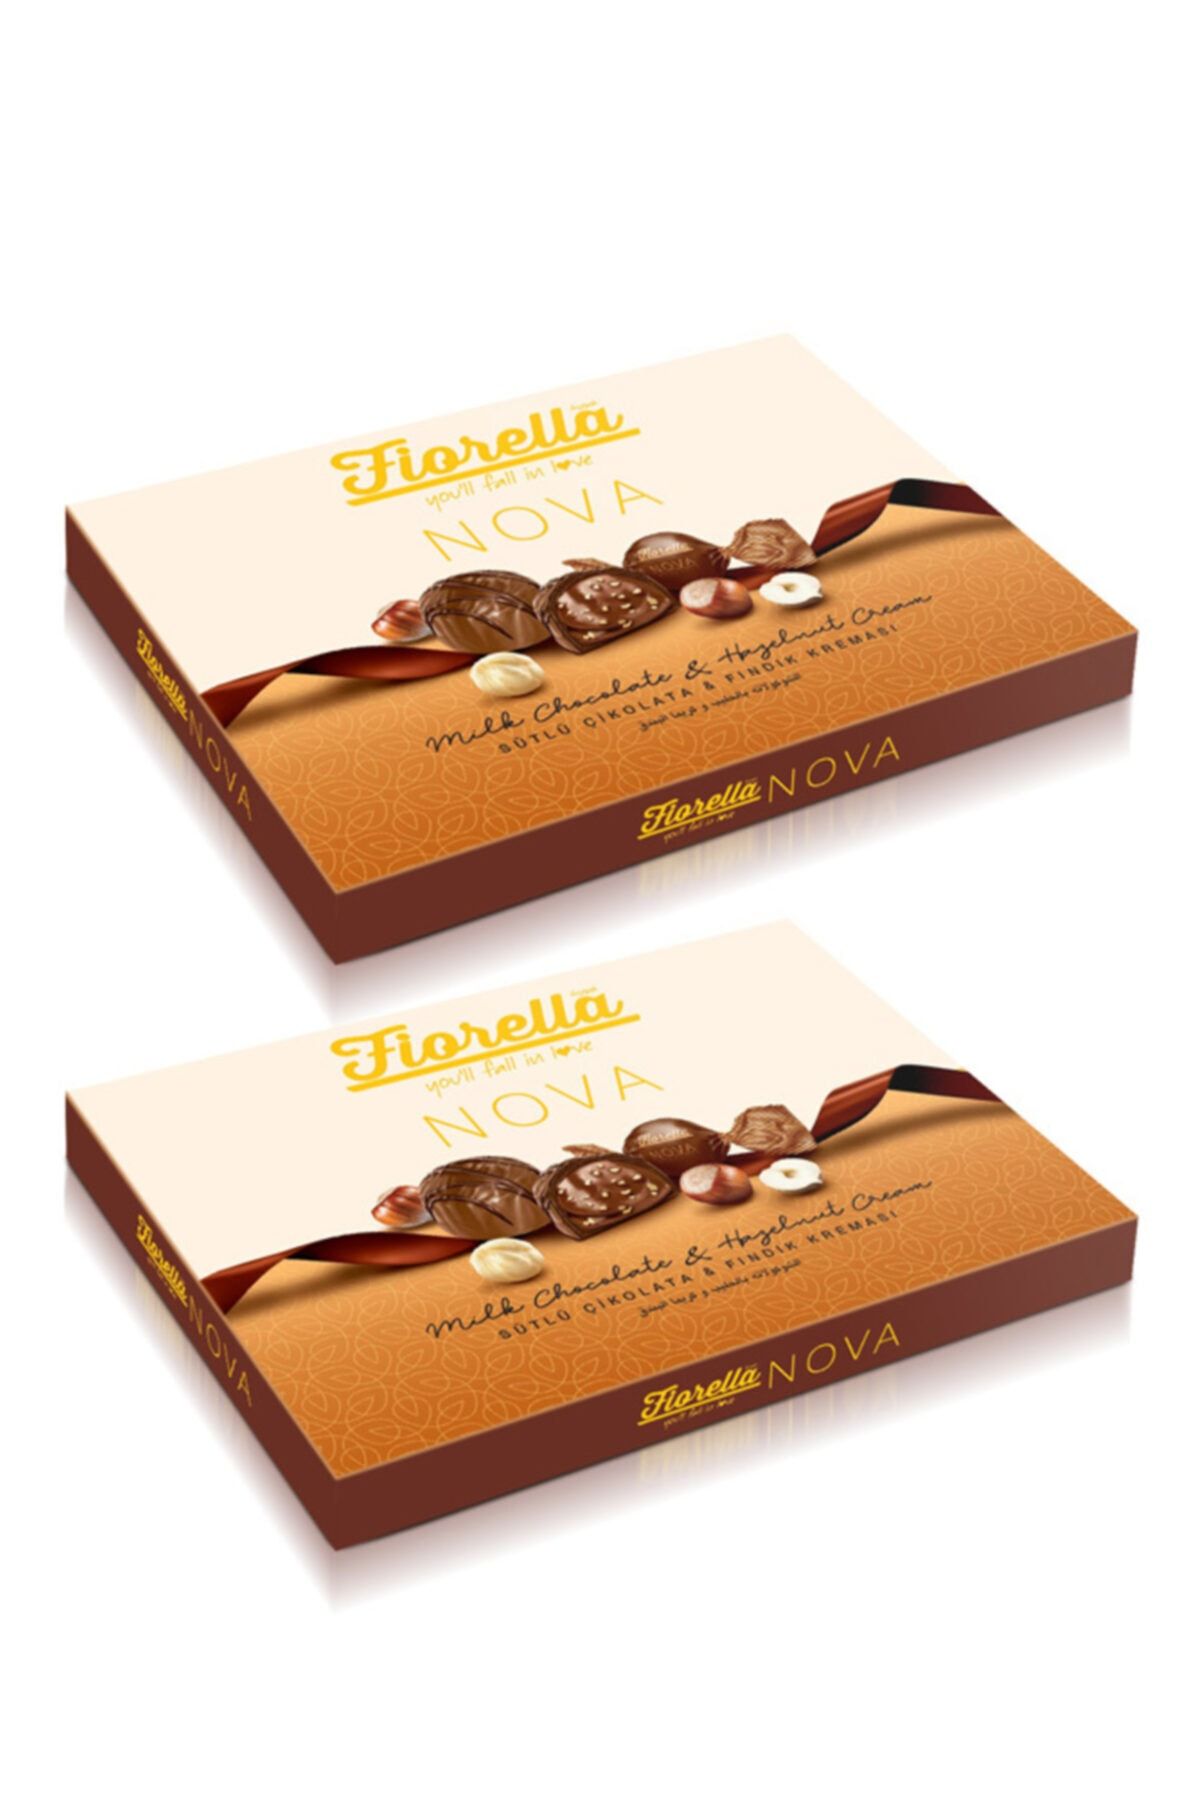 FIORELLA Nova Sütlü Çikolata Ve Fındık Kremalı 250 G. Kutu - 2 Adet